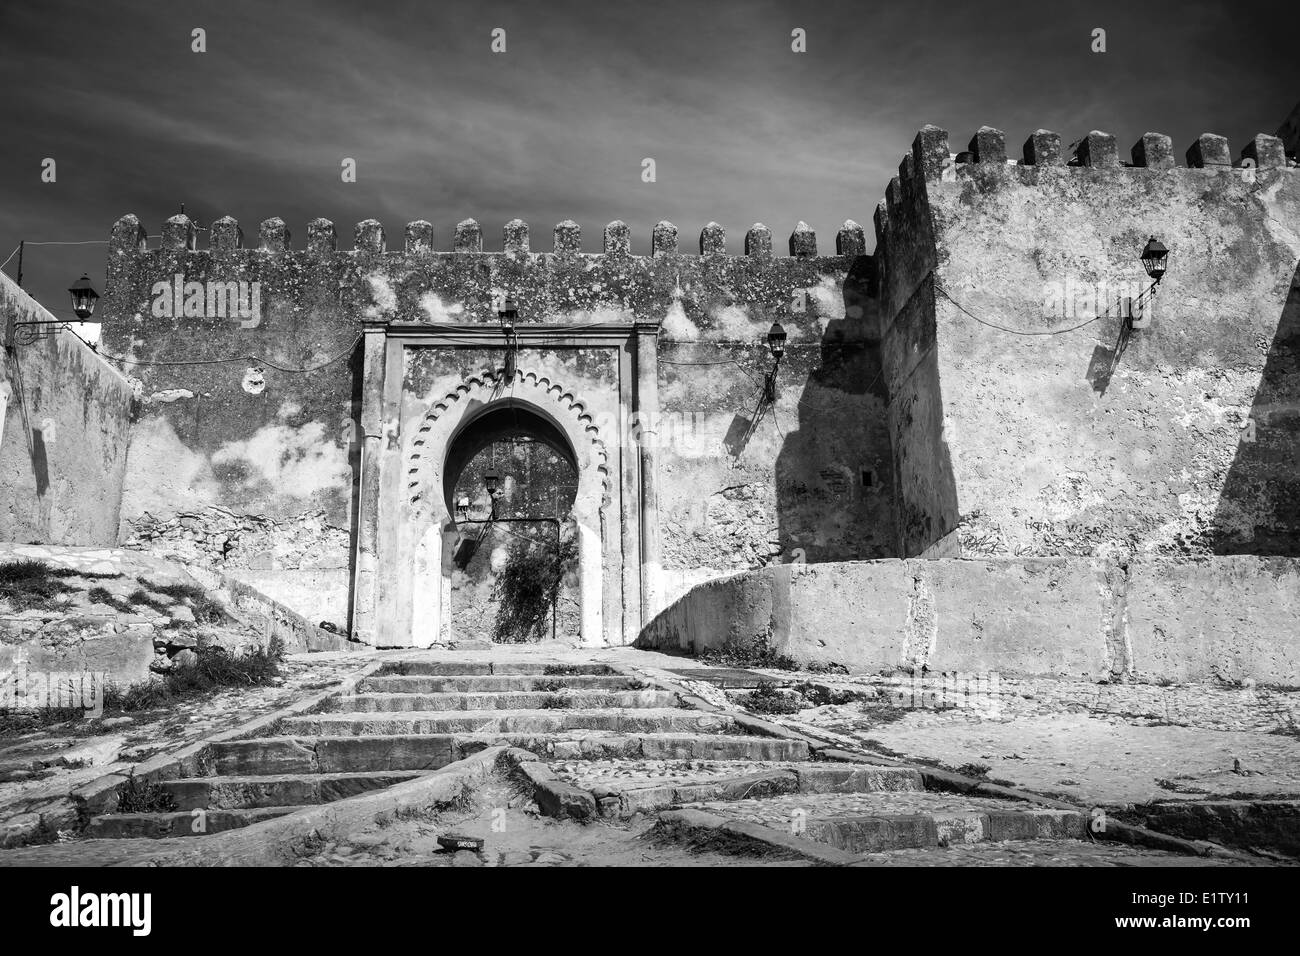 Festung in Medina, schwarz / weiß Foto. Tanger, Marokko Stockfoto